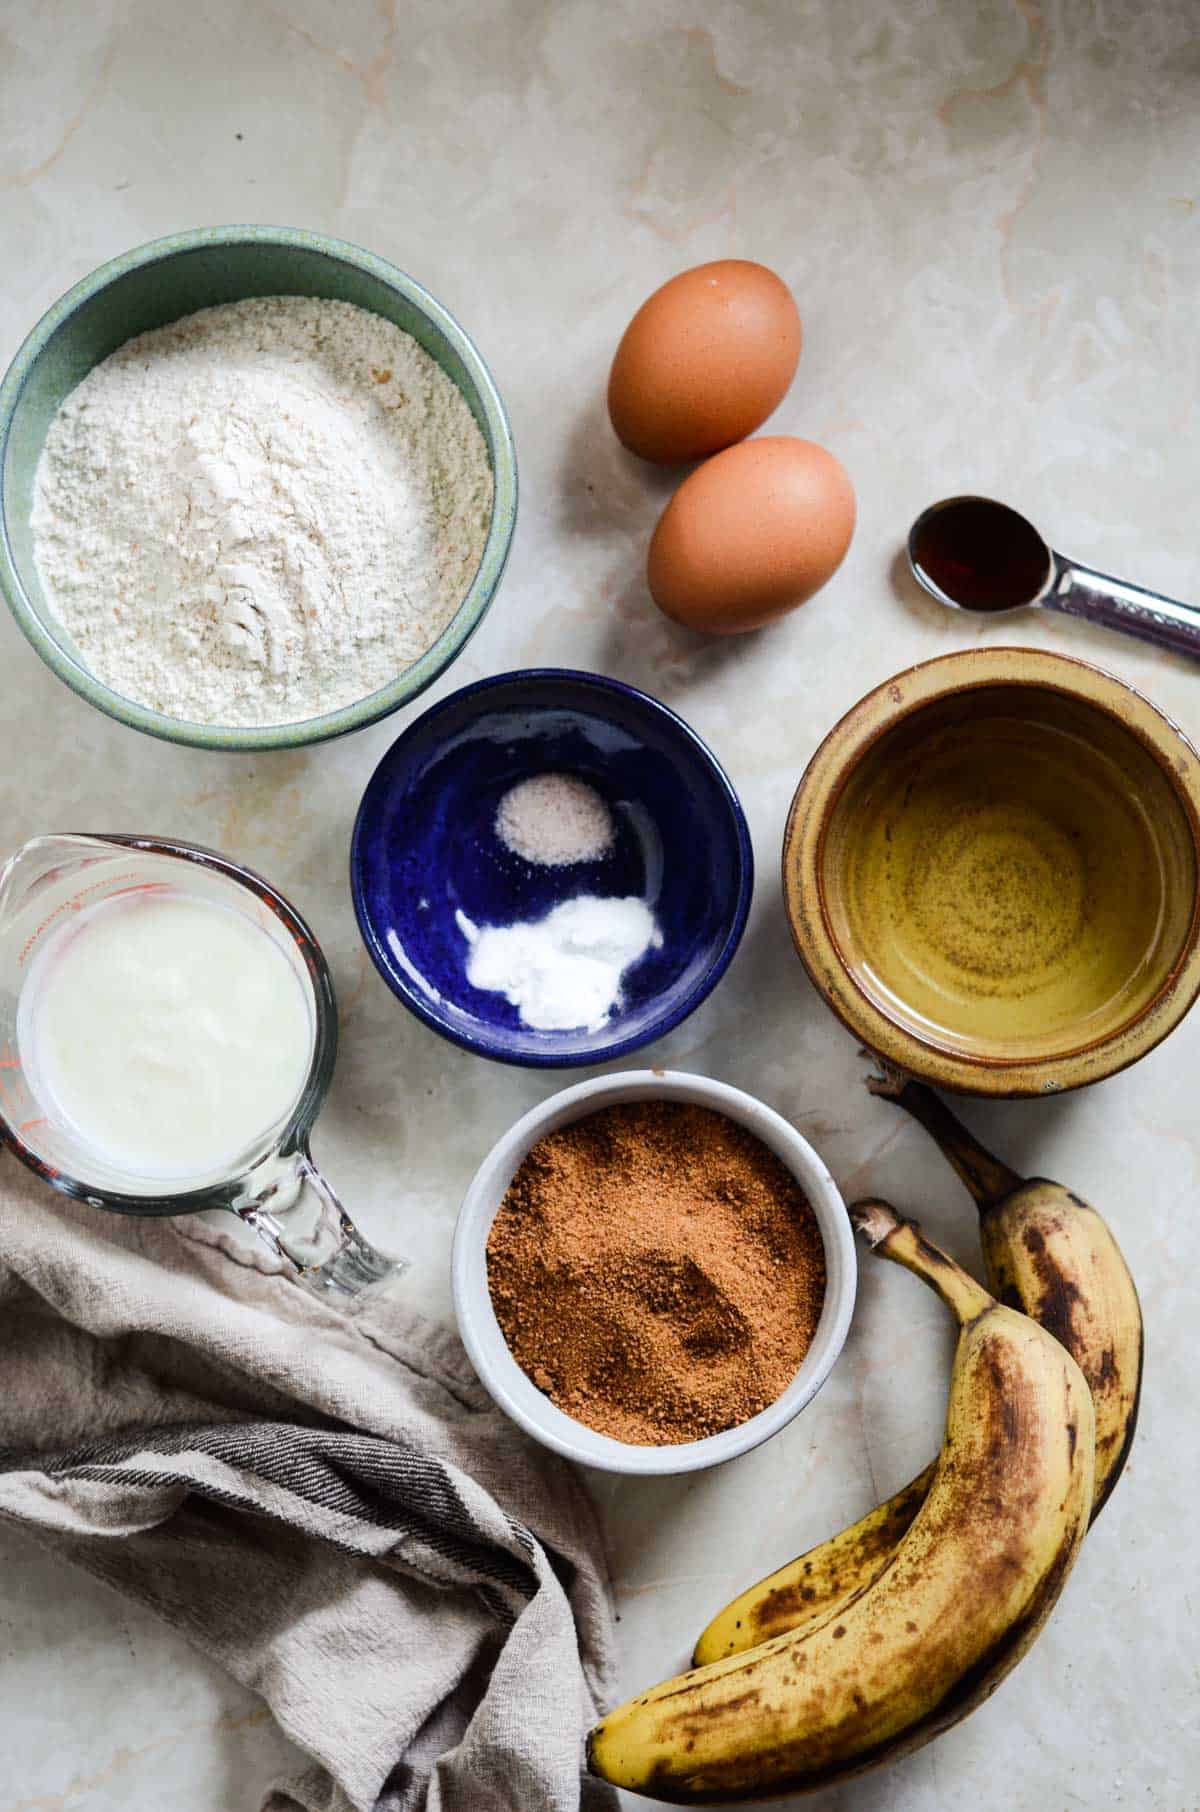 Flour, coconut sugar, baking soda, salt, eggs, oil, vanilla, bananas, yogurt, measuring into little bowls ready to make banana bread.